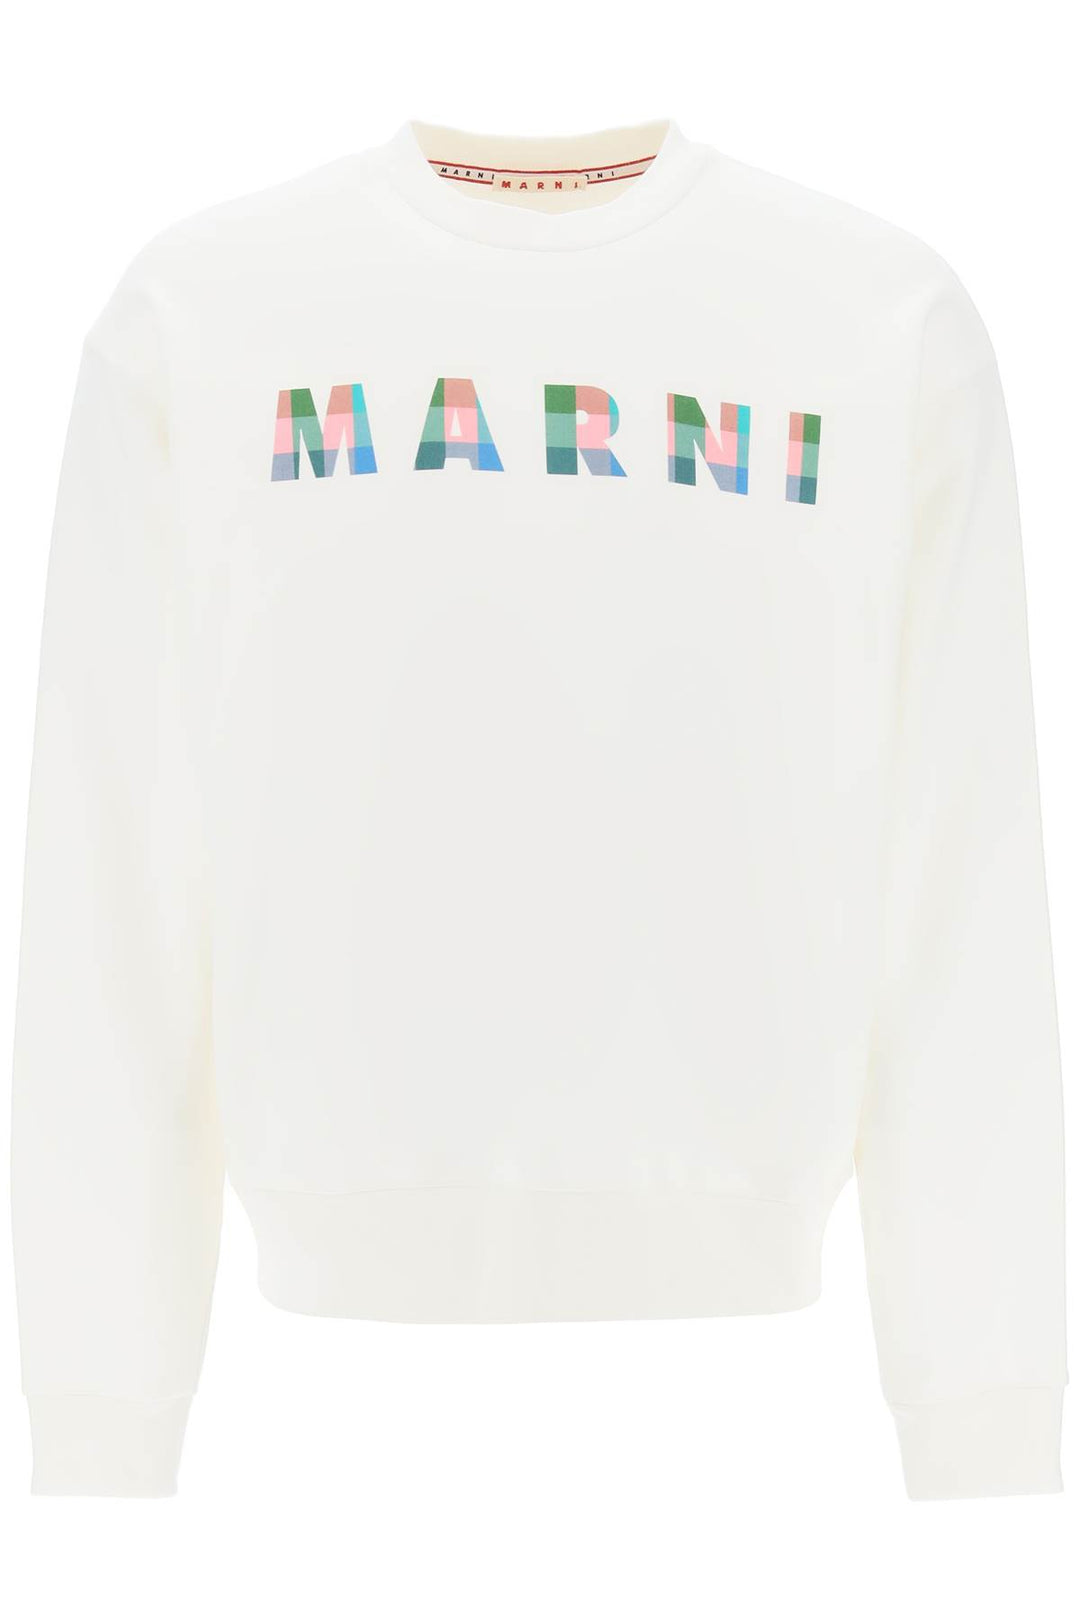 Marni sweatshirt with plaid logo-0